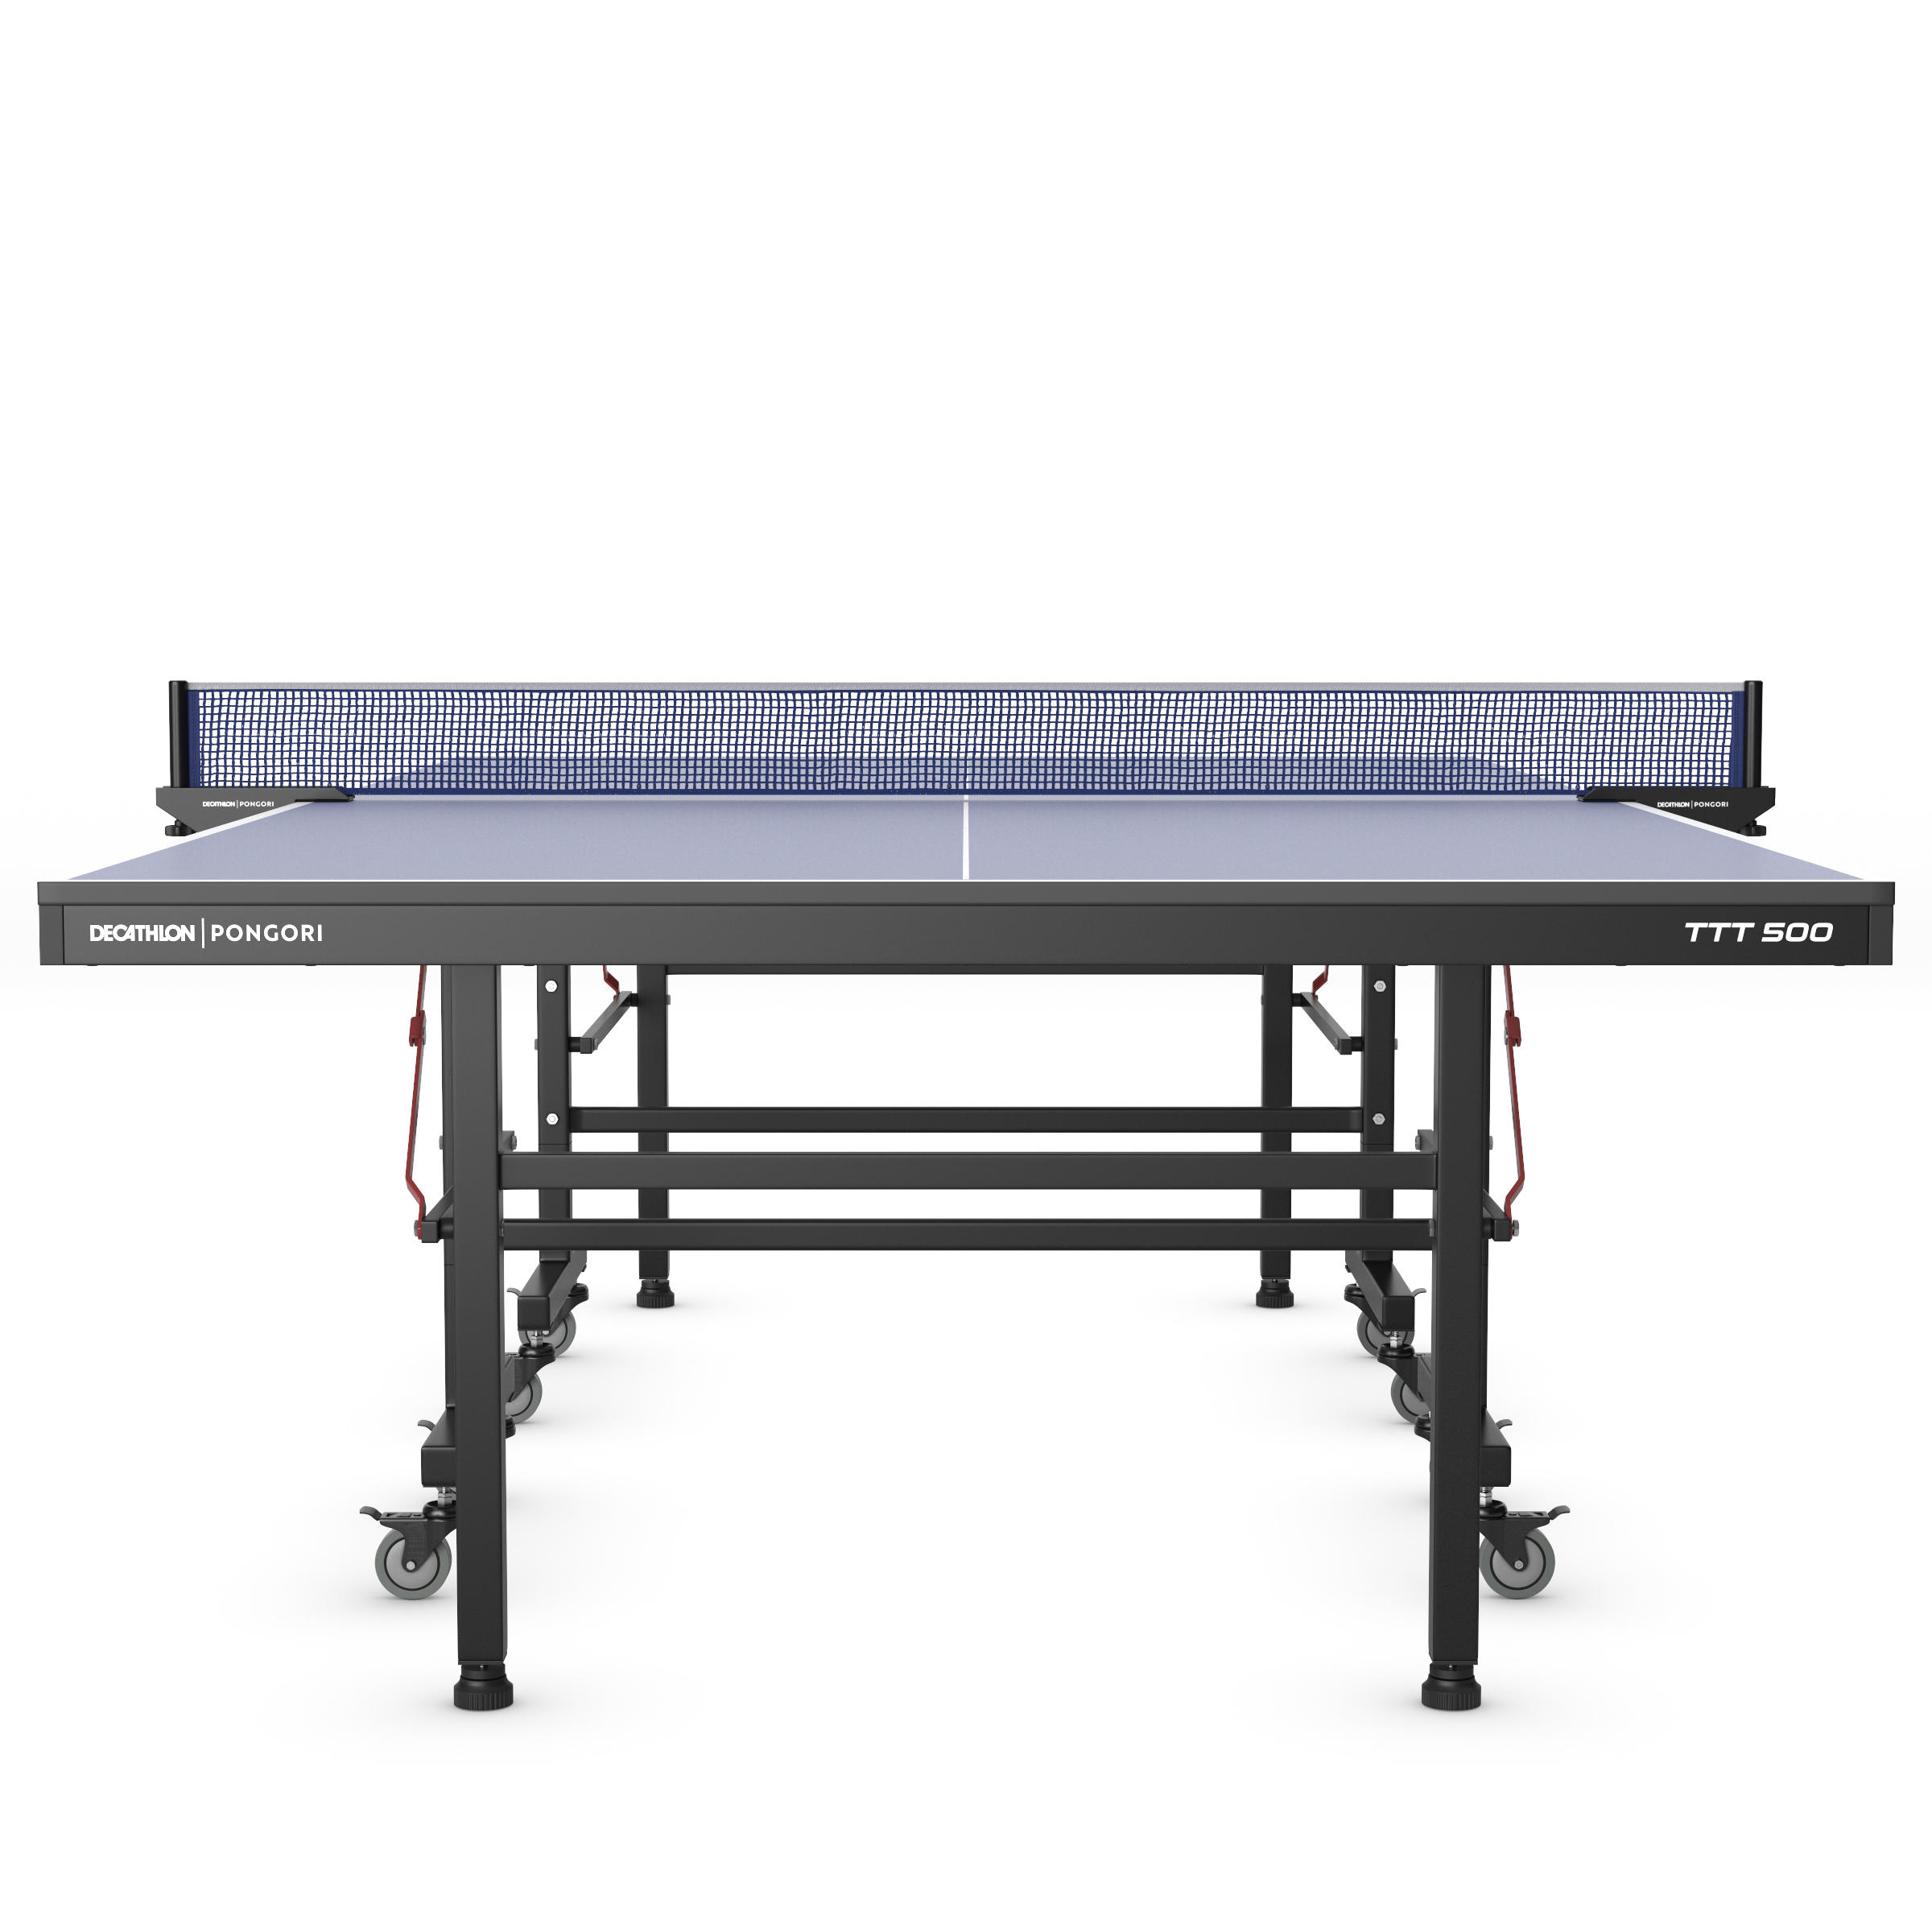 ITTF Approved Club Table Tennis Table TTT 500 8/13